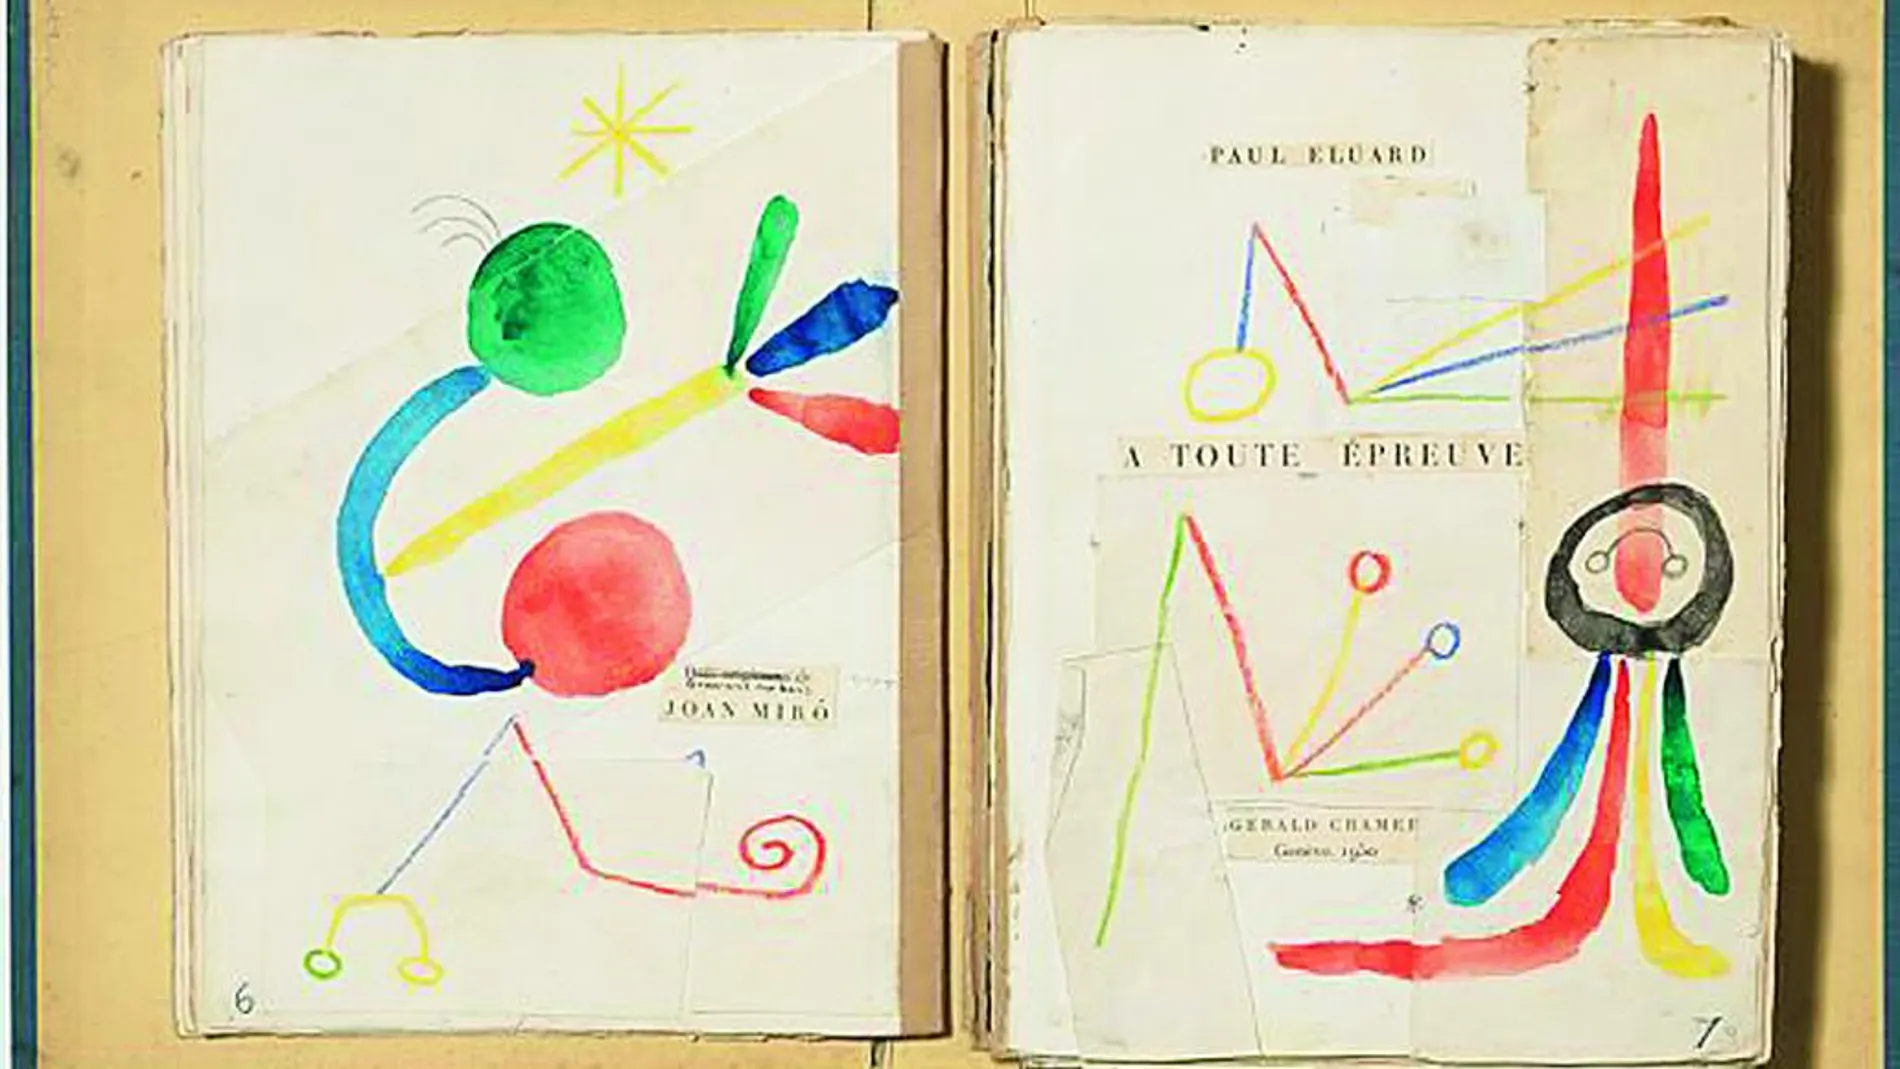 Maqueta de «À toute épreuve», la obra en la que colaboraron Joan Miró y el poeta surrealista Paul Éluard.